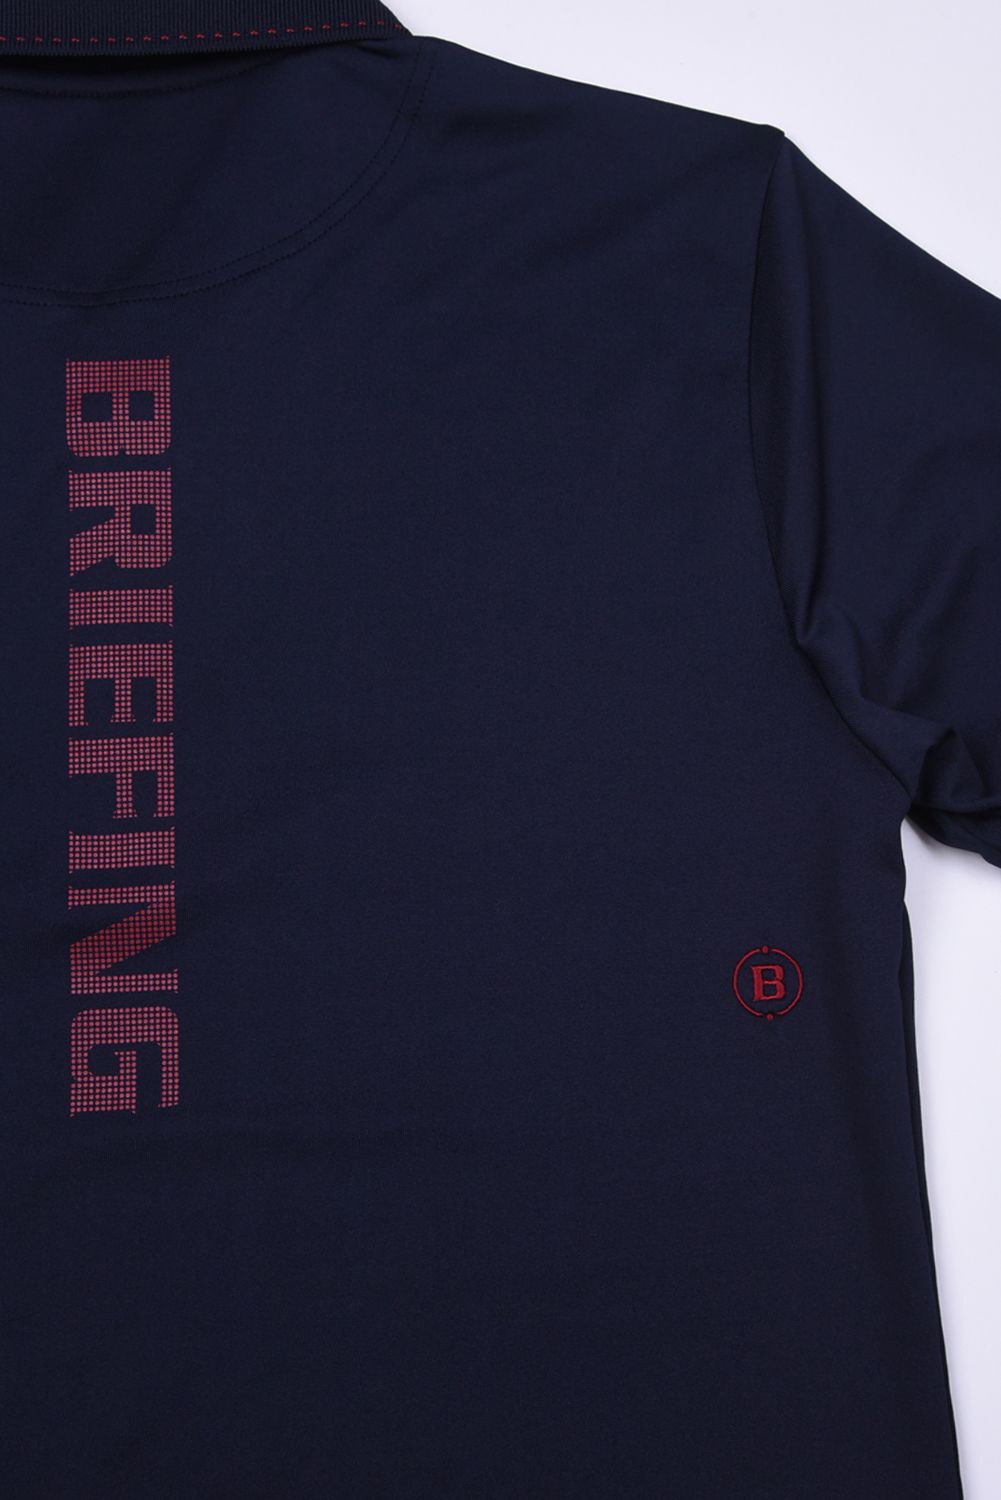 BRIEFING - MENS TOUR POLO / 刺繍ブランドロゴ ベーシック ポロシャツ